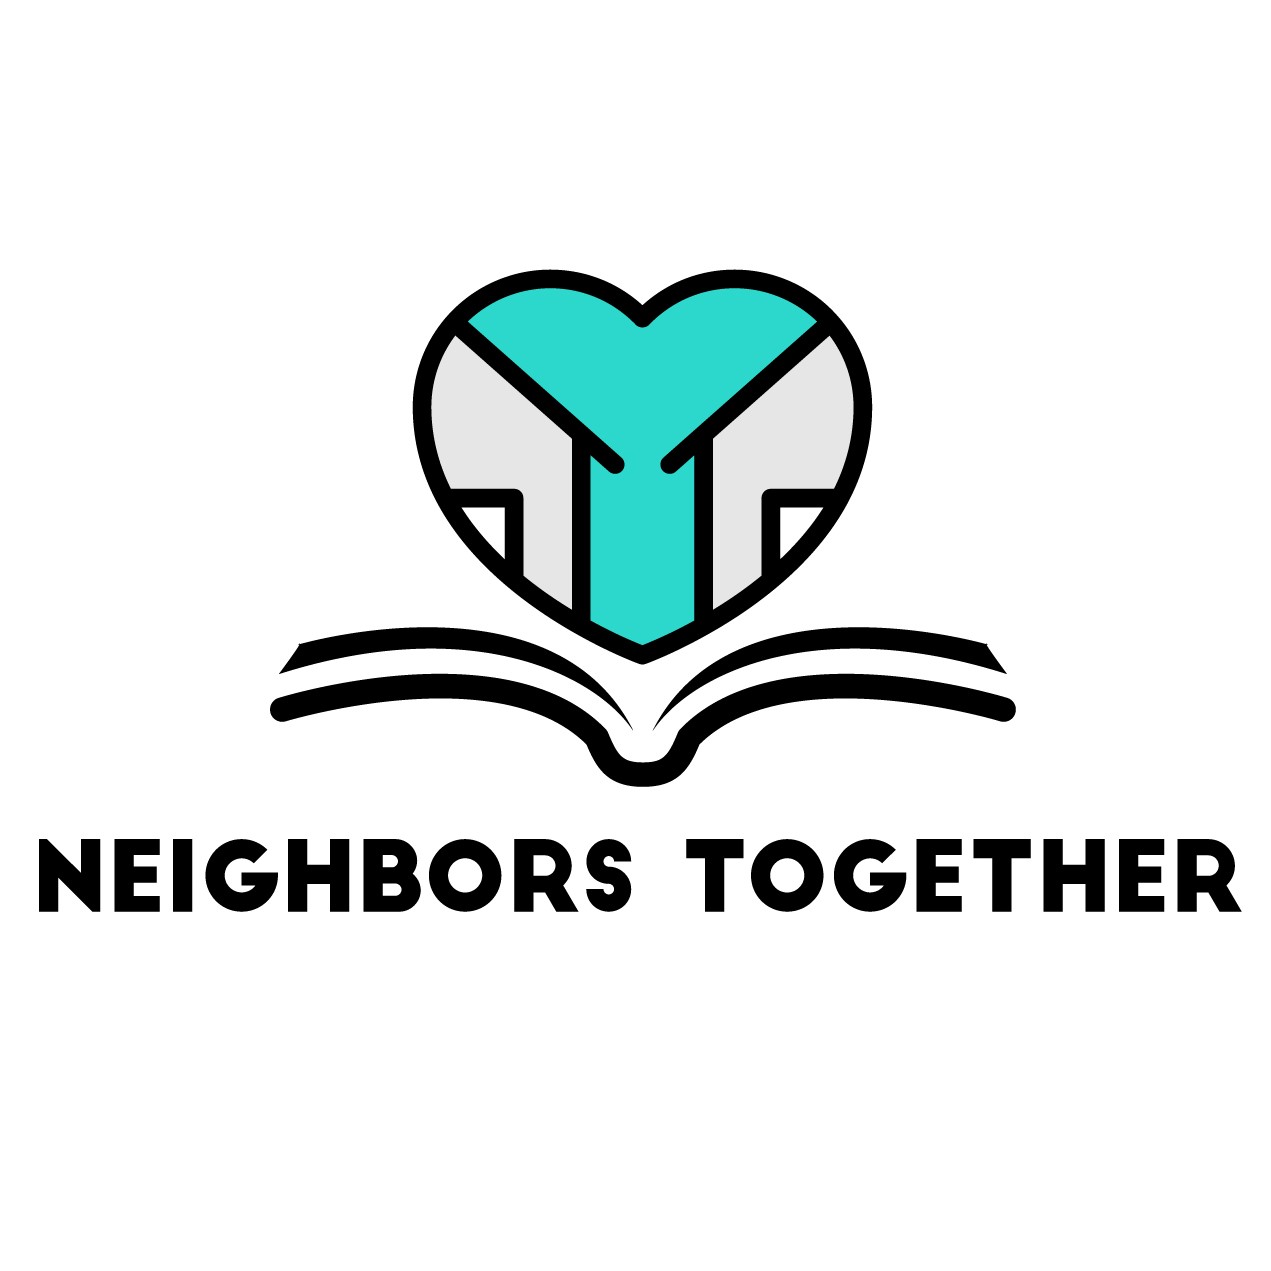 Neighbors Together program series